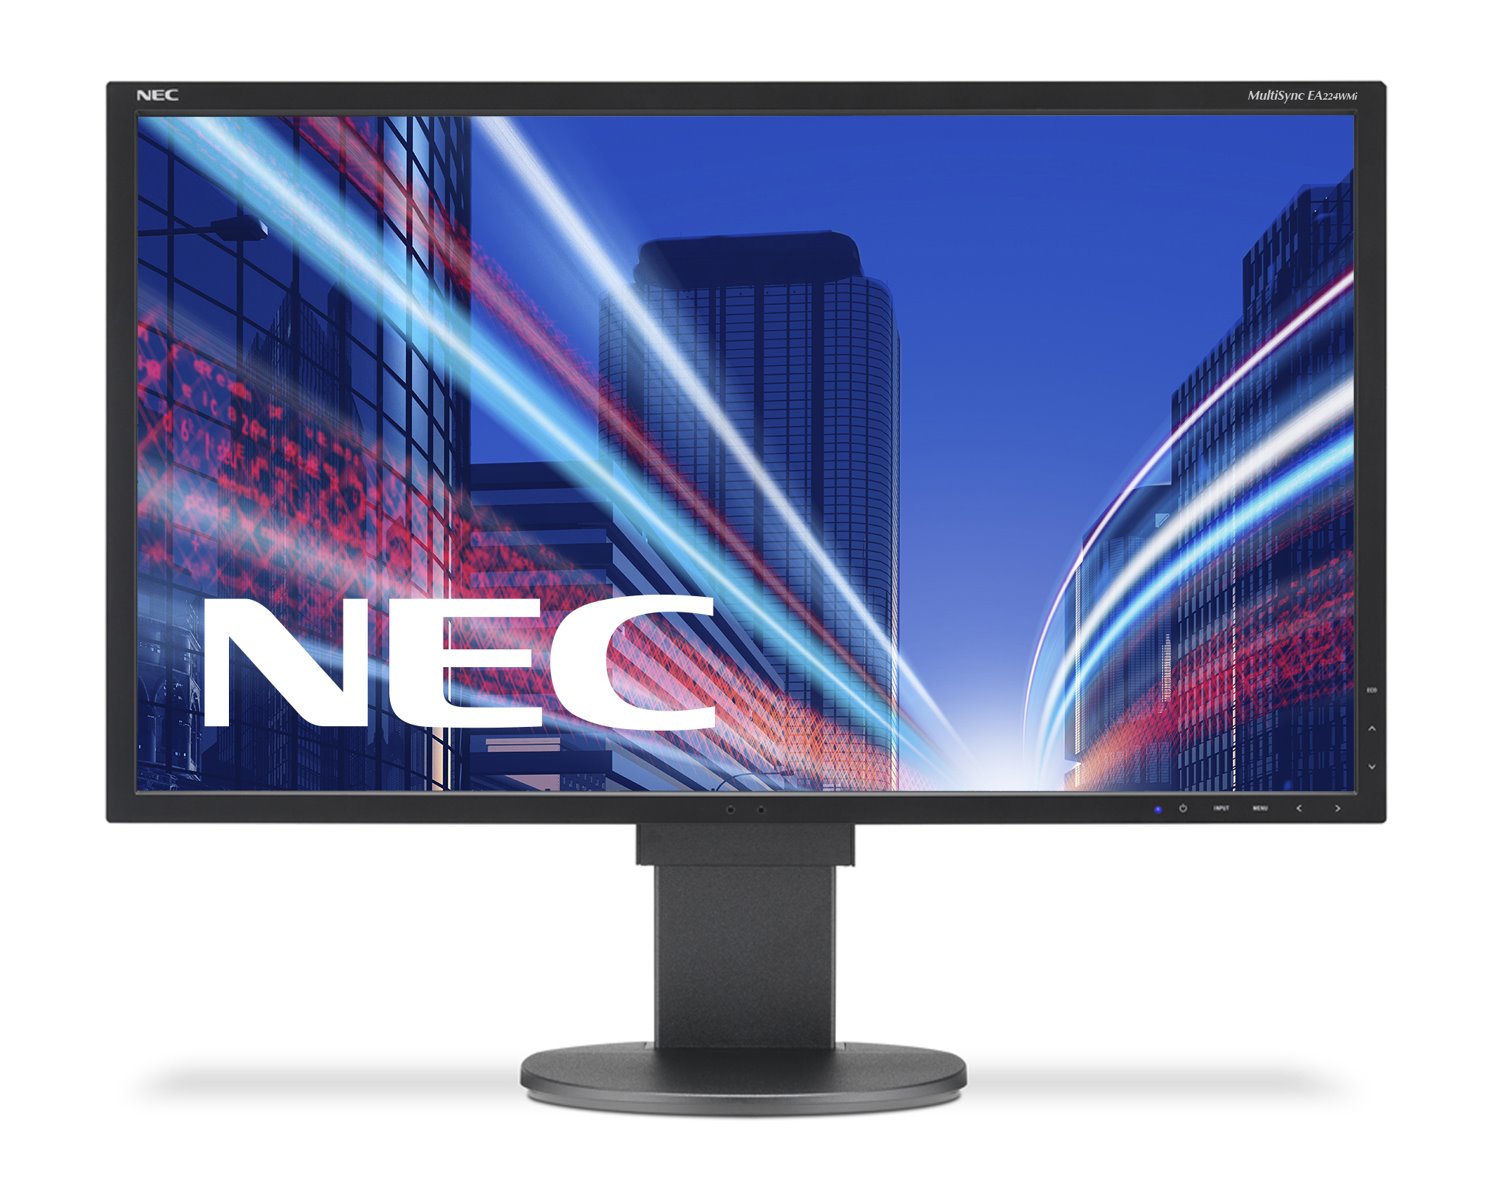 NEC Display MultiSync EA224WMi 22" Full HD LED LCD Monitor - 16:9 - Black